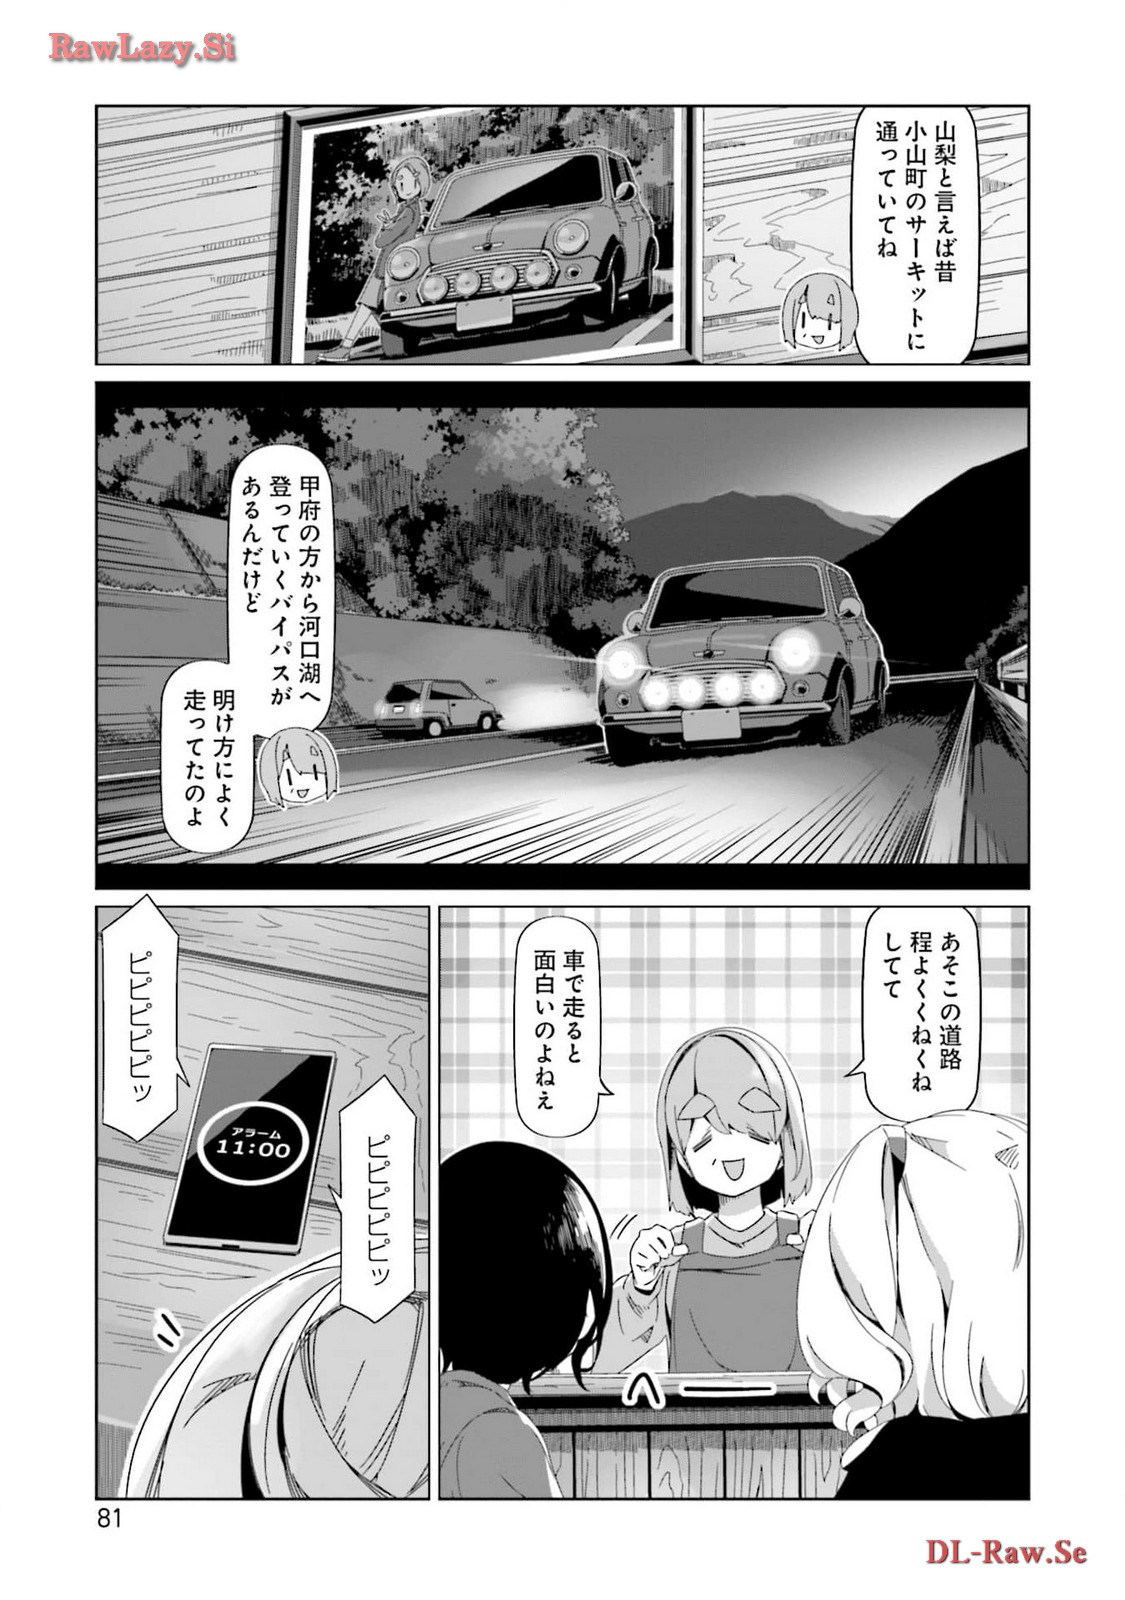 Yuru Camp - Chapter 91 - Page 1